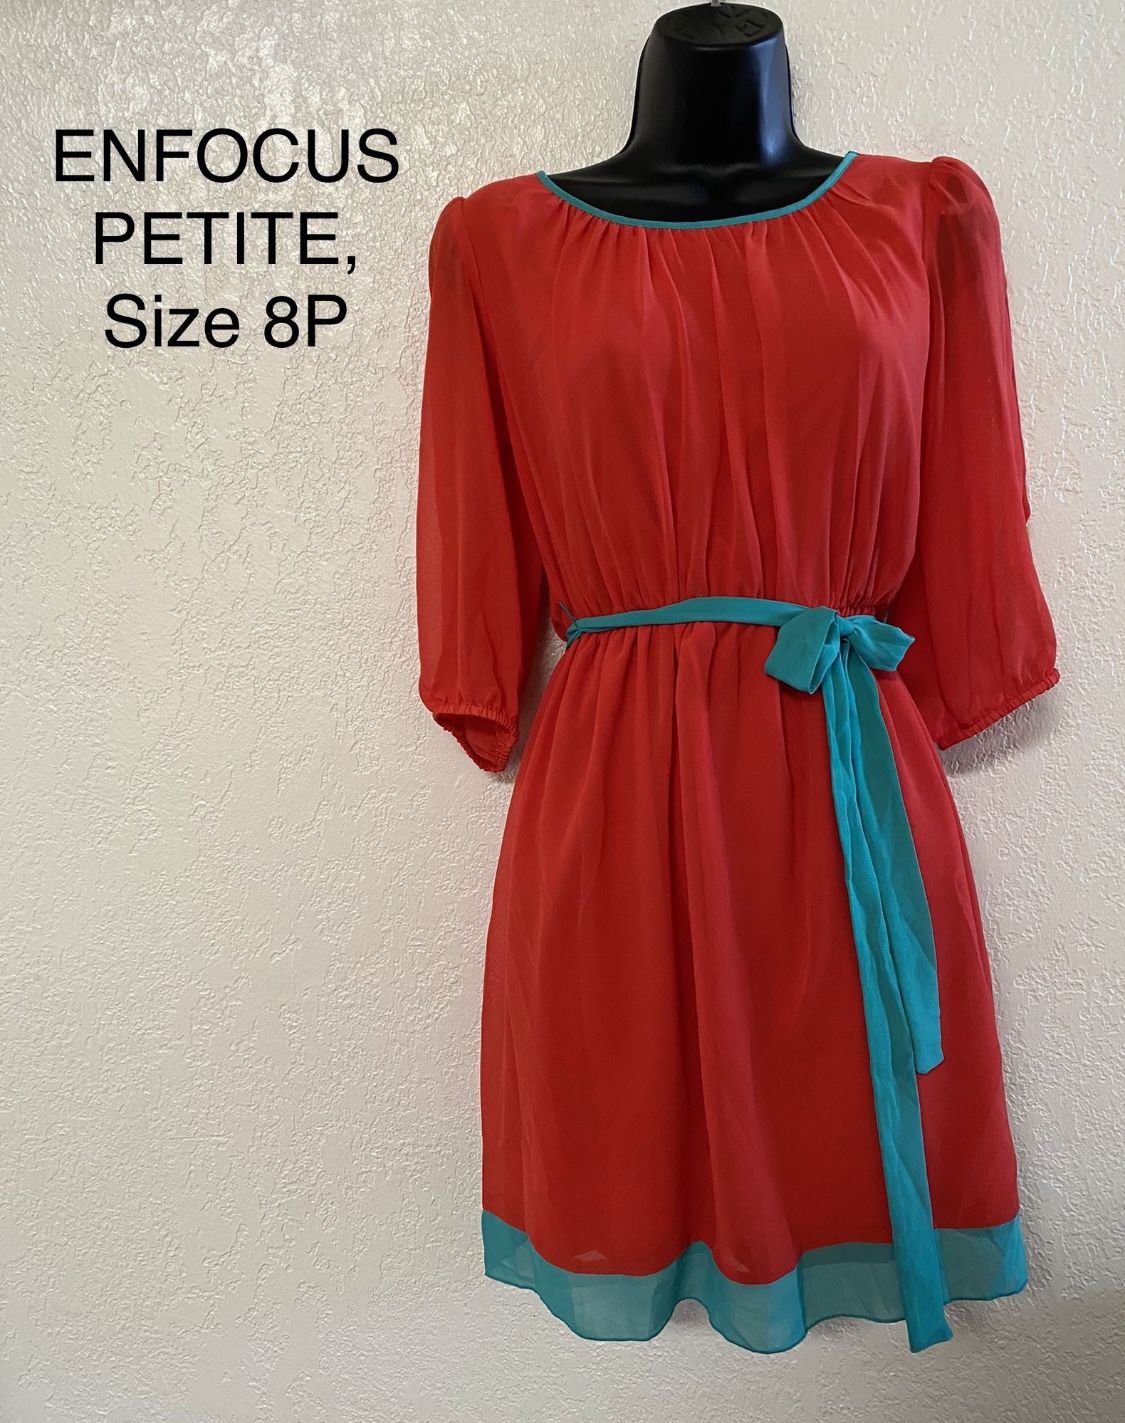 ENFOCUS PETITE, Orange Chiffon Dress, Size 8P